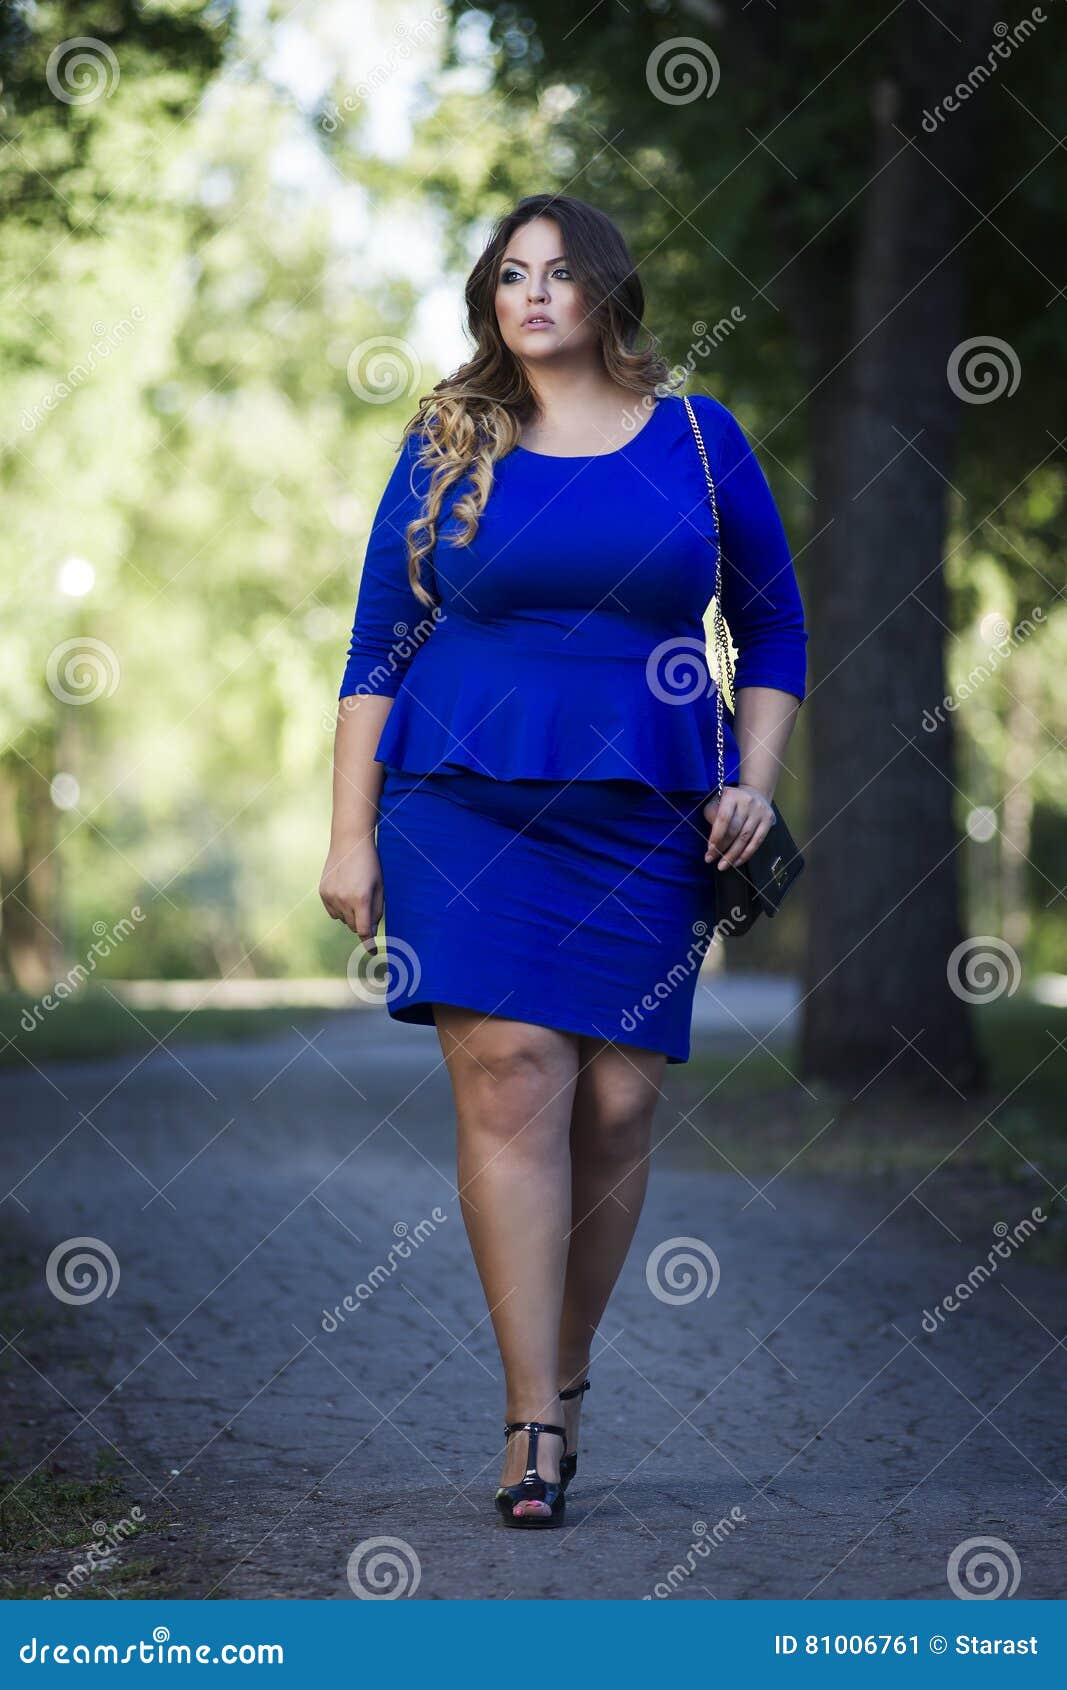 https://thumbs.dreamstime.com/z/young-beautiful-stylish-plus-size-fashion-model-blue-dress-outdoors-xxl-woman-nature-full-length-portrait-professional-81006761.jpg